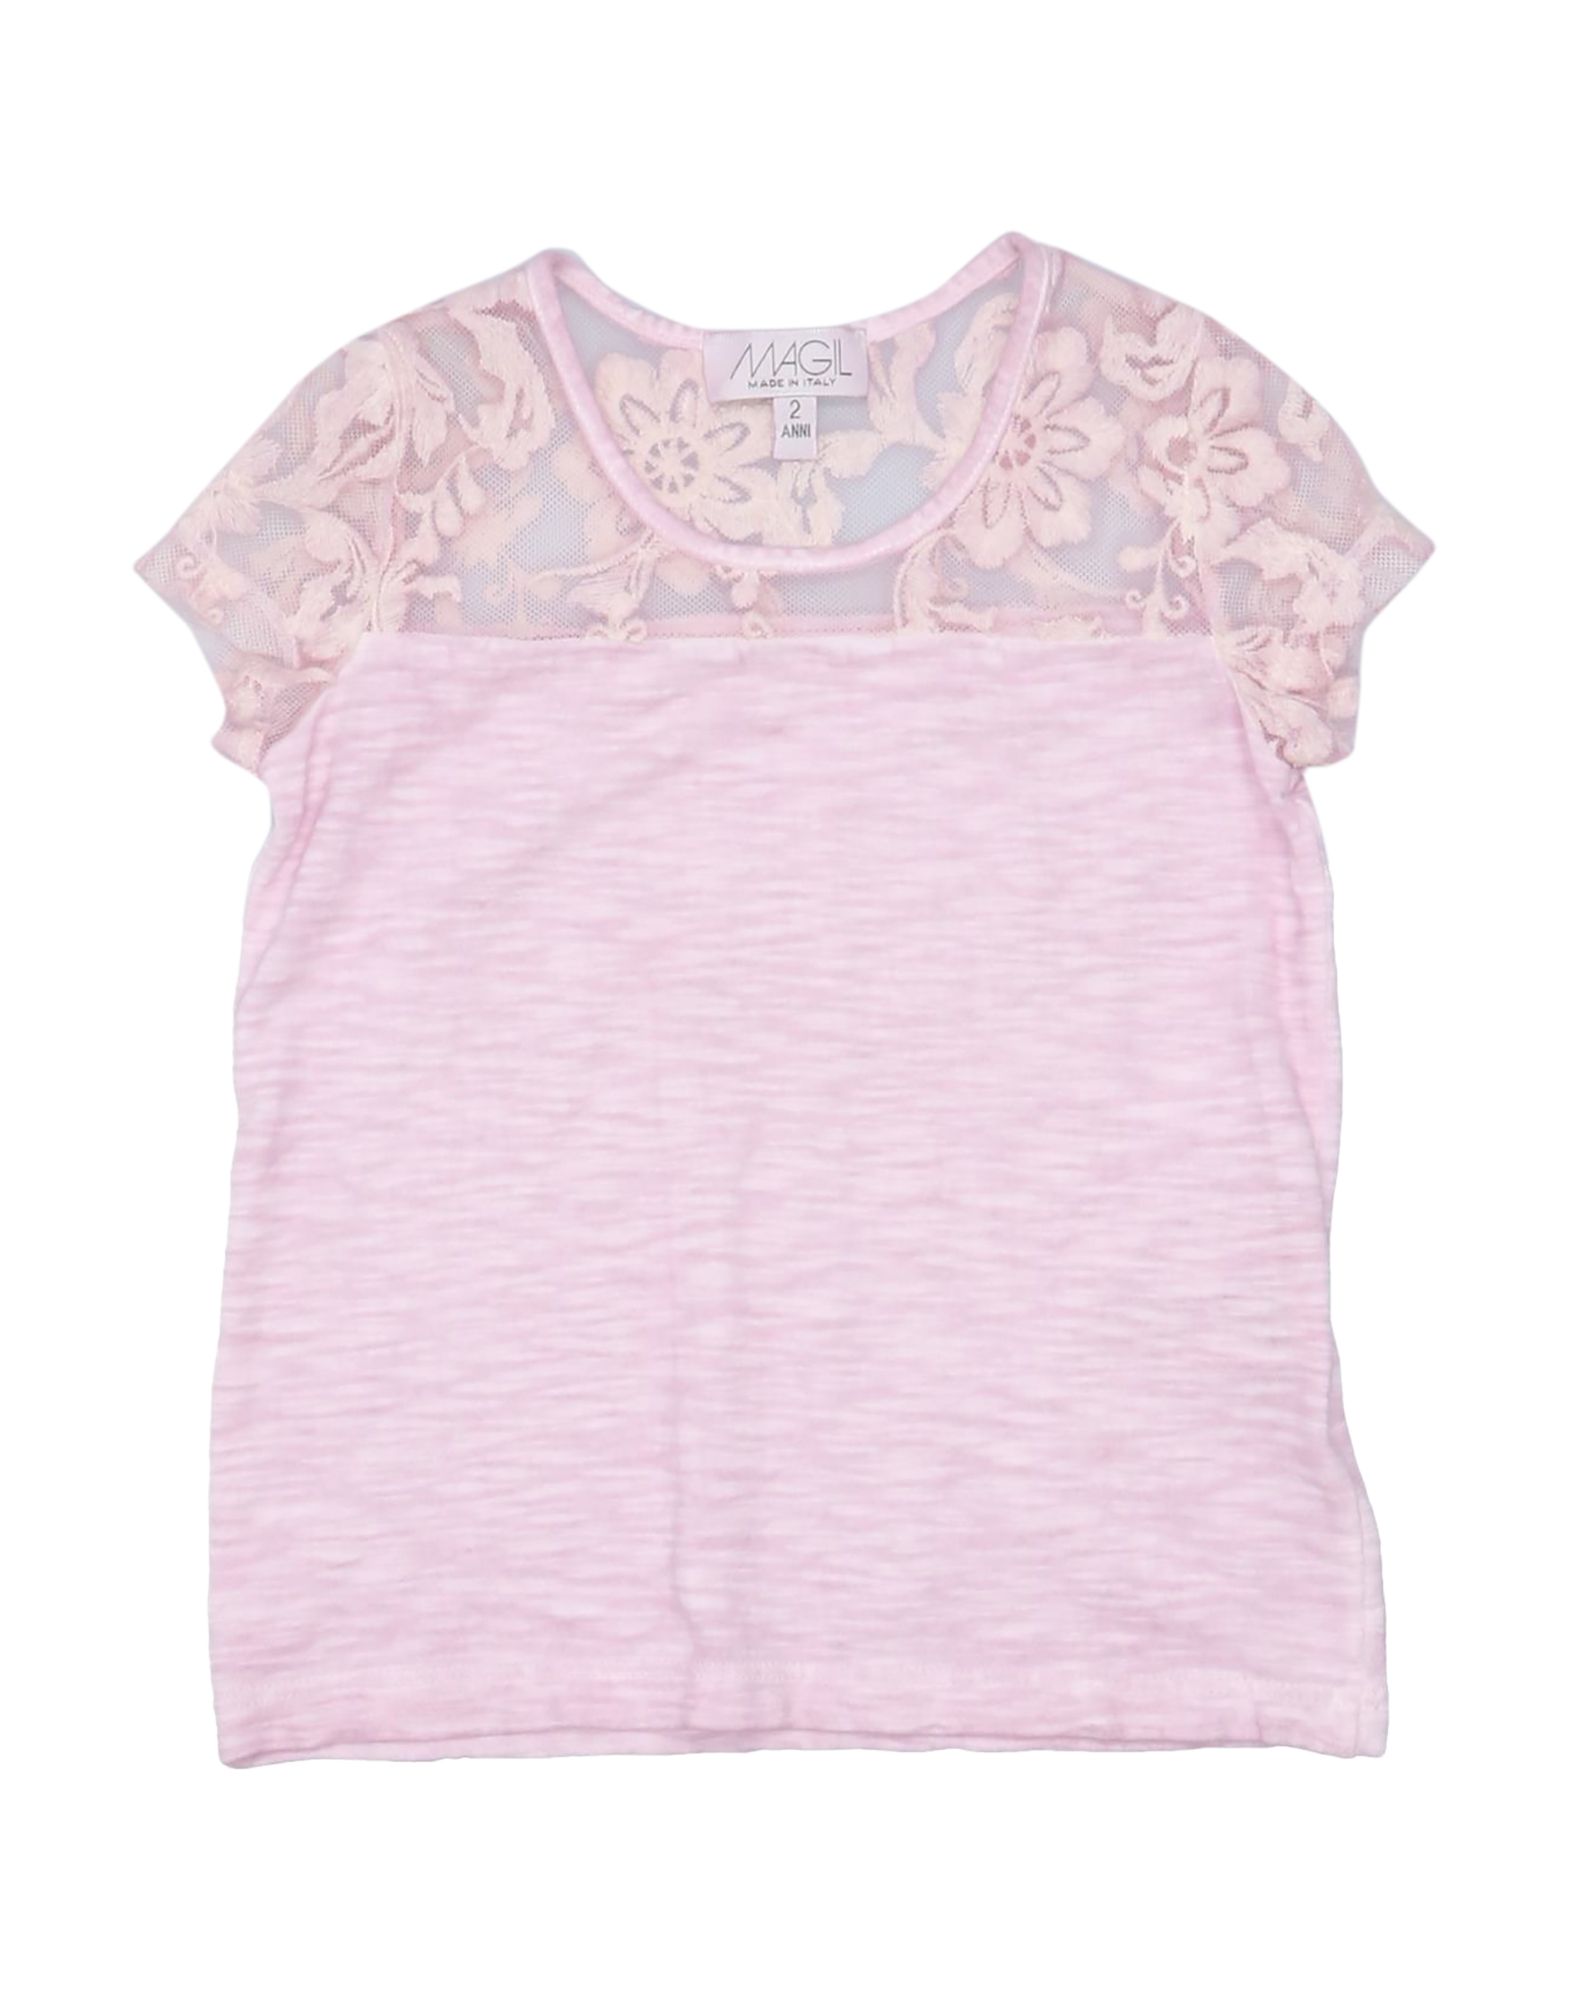 Magil Kids' T-shirts In Pink